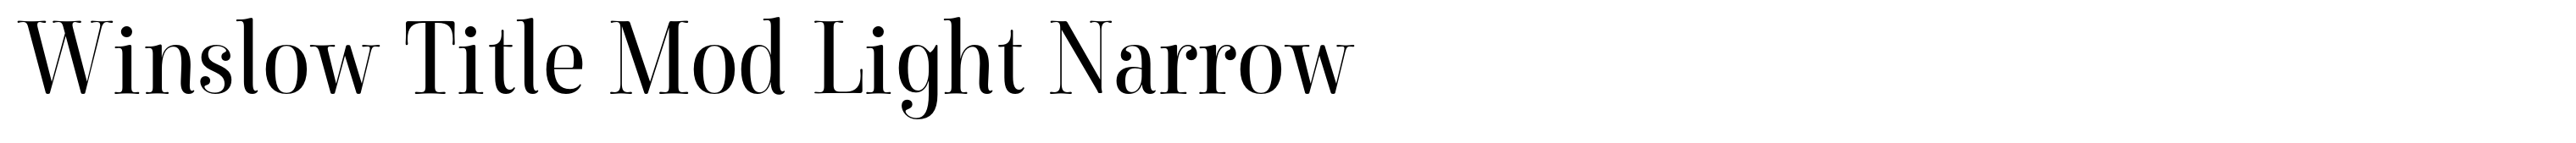 Winslow Title Mod Light Narrow